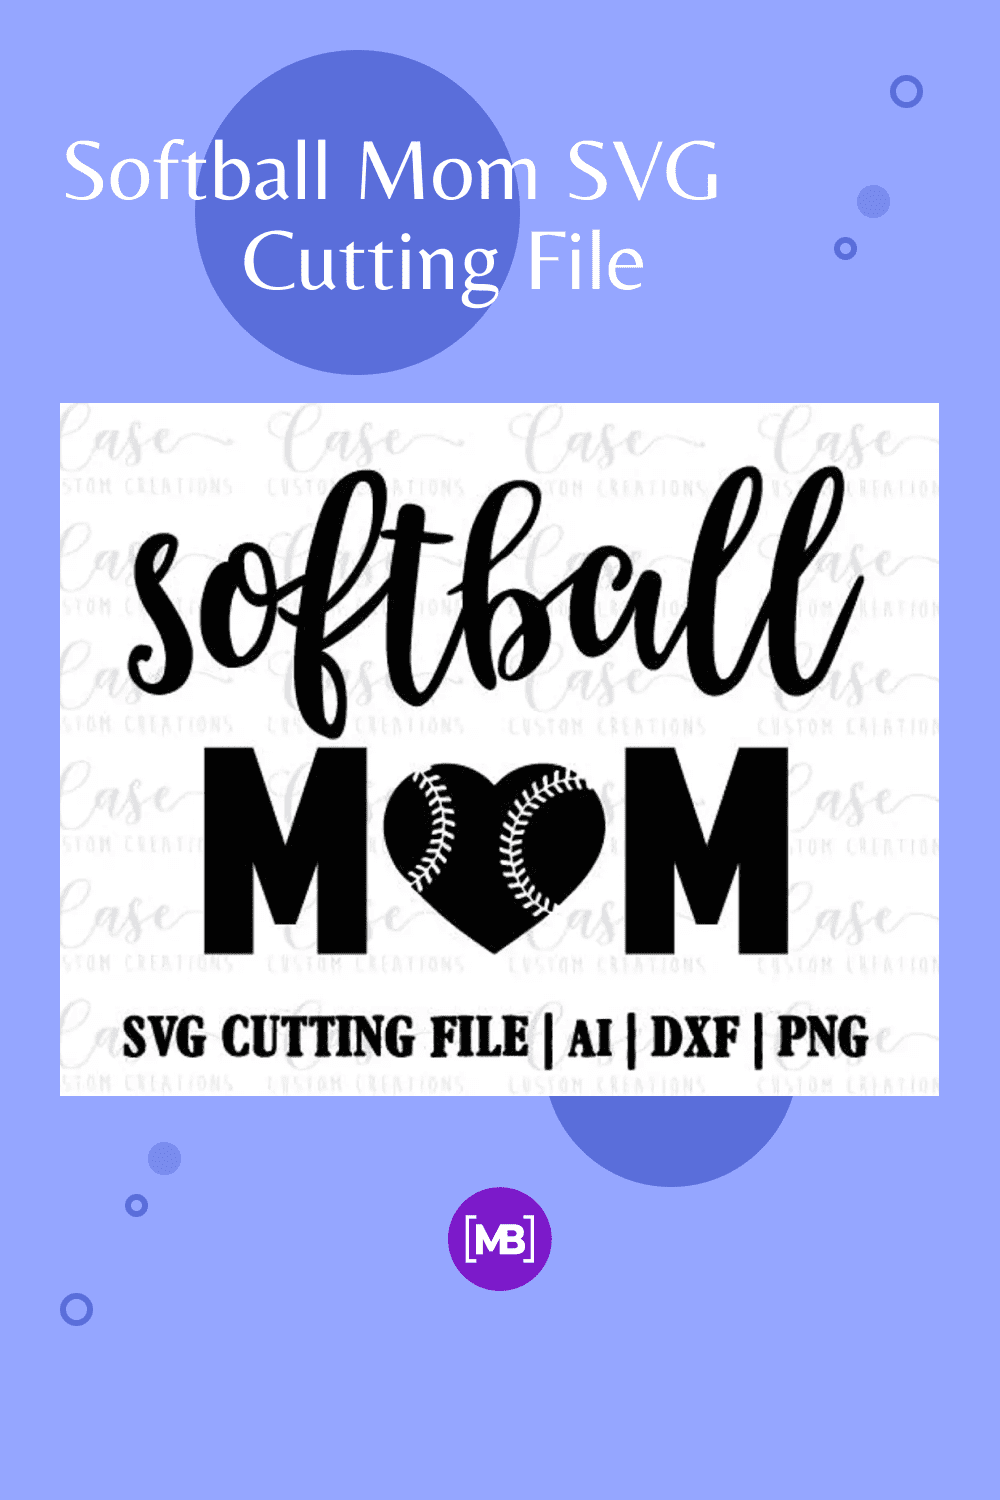 Softball Mom SVG Cutting File.